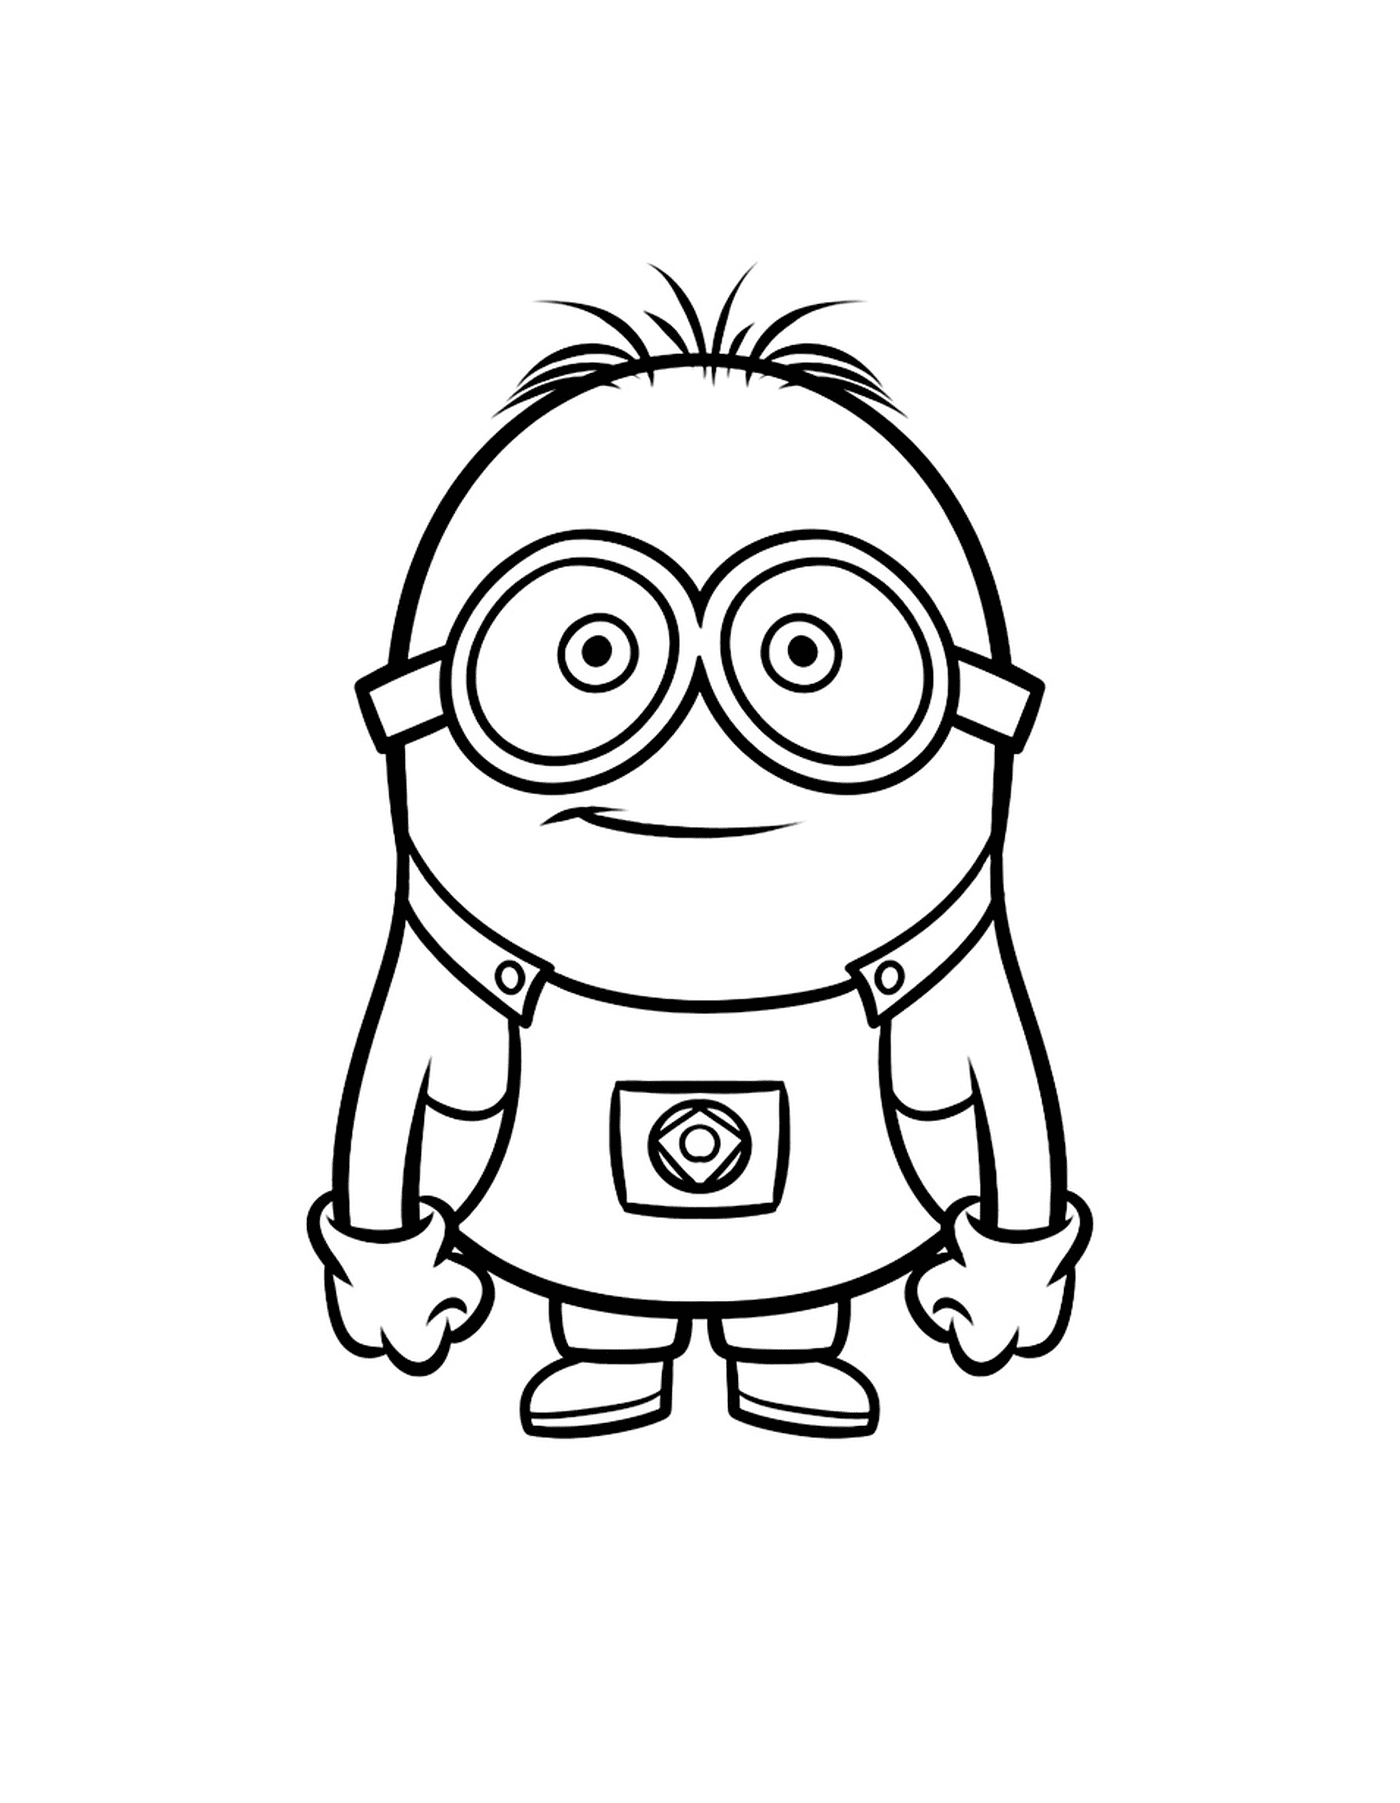  Молодой Миньон с очками, анимационный персонаж 